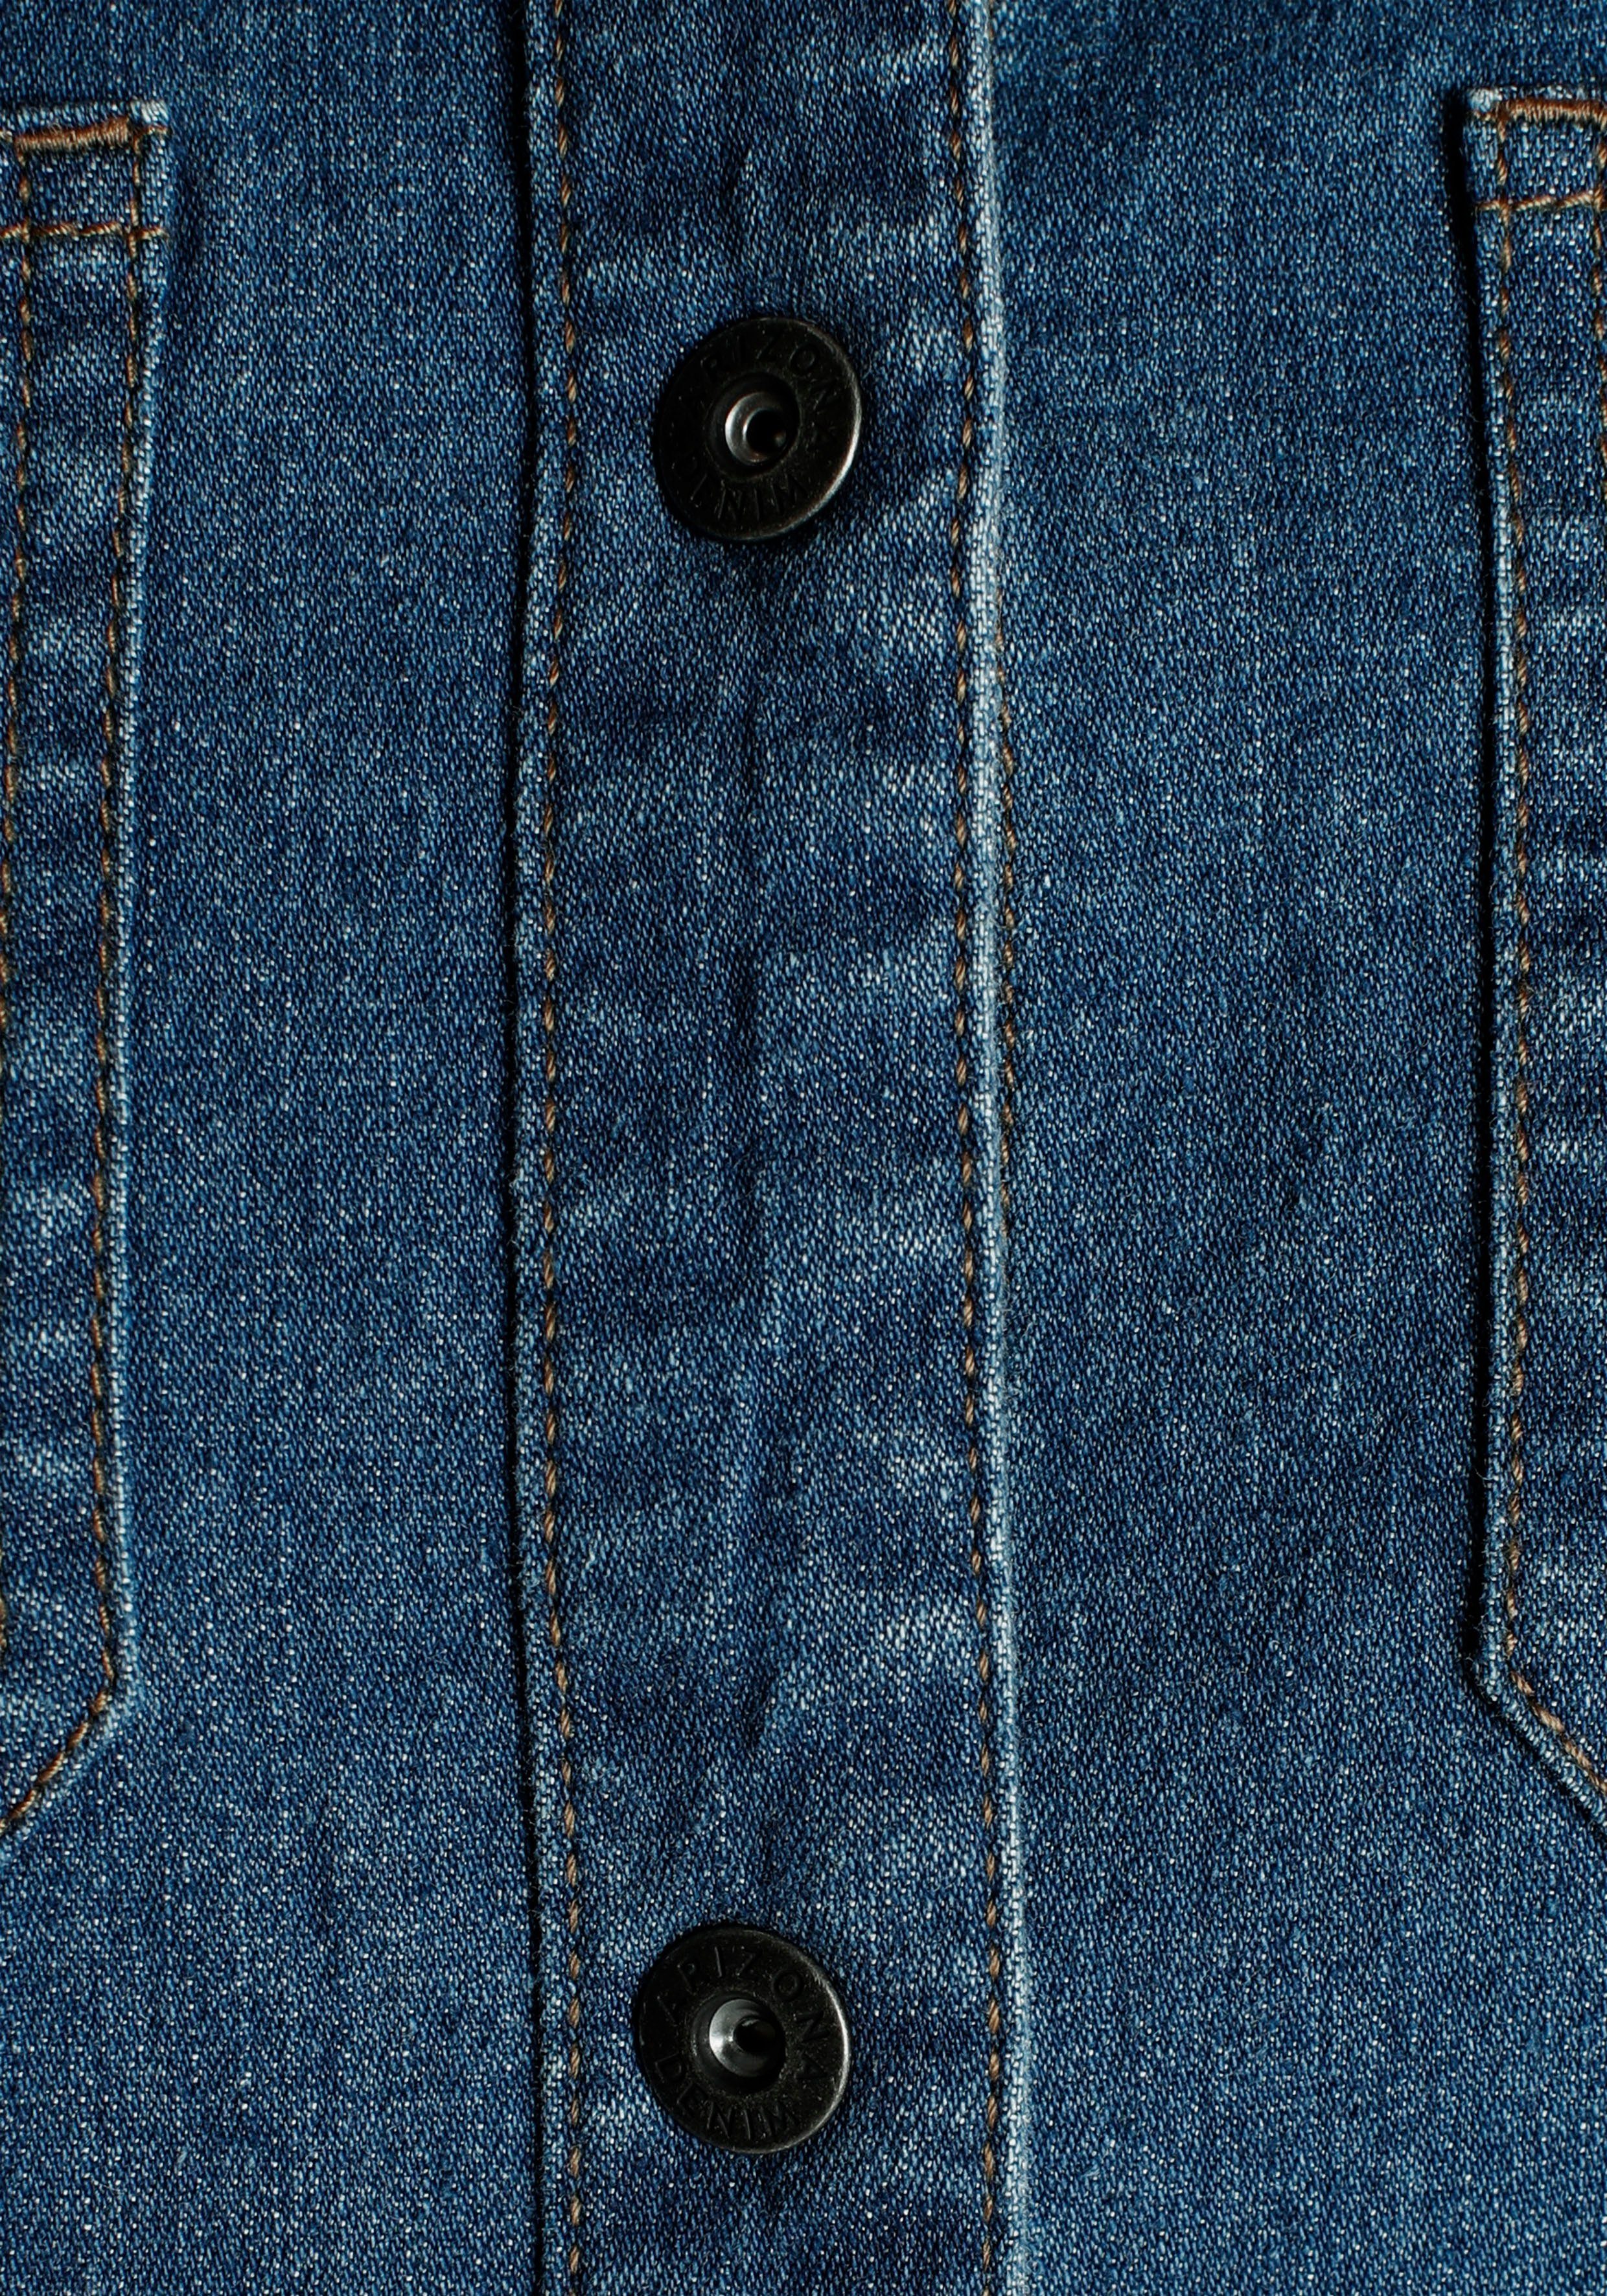 Hemdjacke - Arizona used dark Jeansjacke Denim Weiter Shacket blue geschnitten